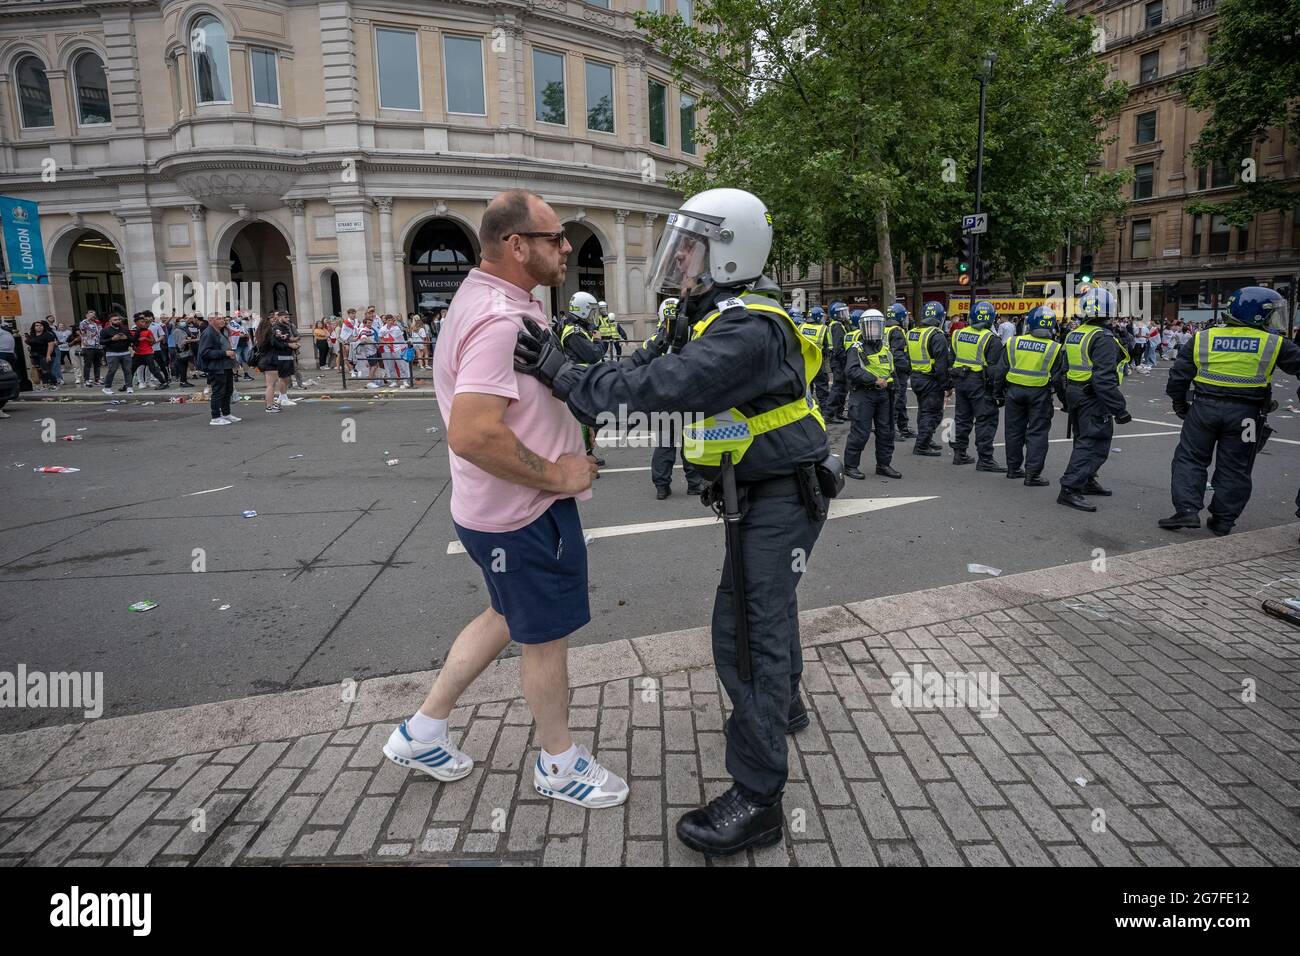 Euro 2020: Disorderly behaviour as thousands of football fans crowd near Trafalgar Square ahead of England vs Italy match finals. London, UK. Stock Photo